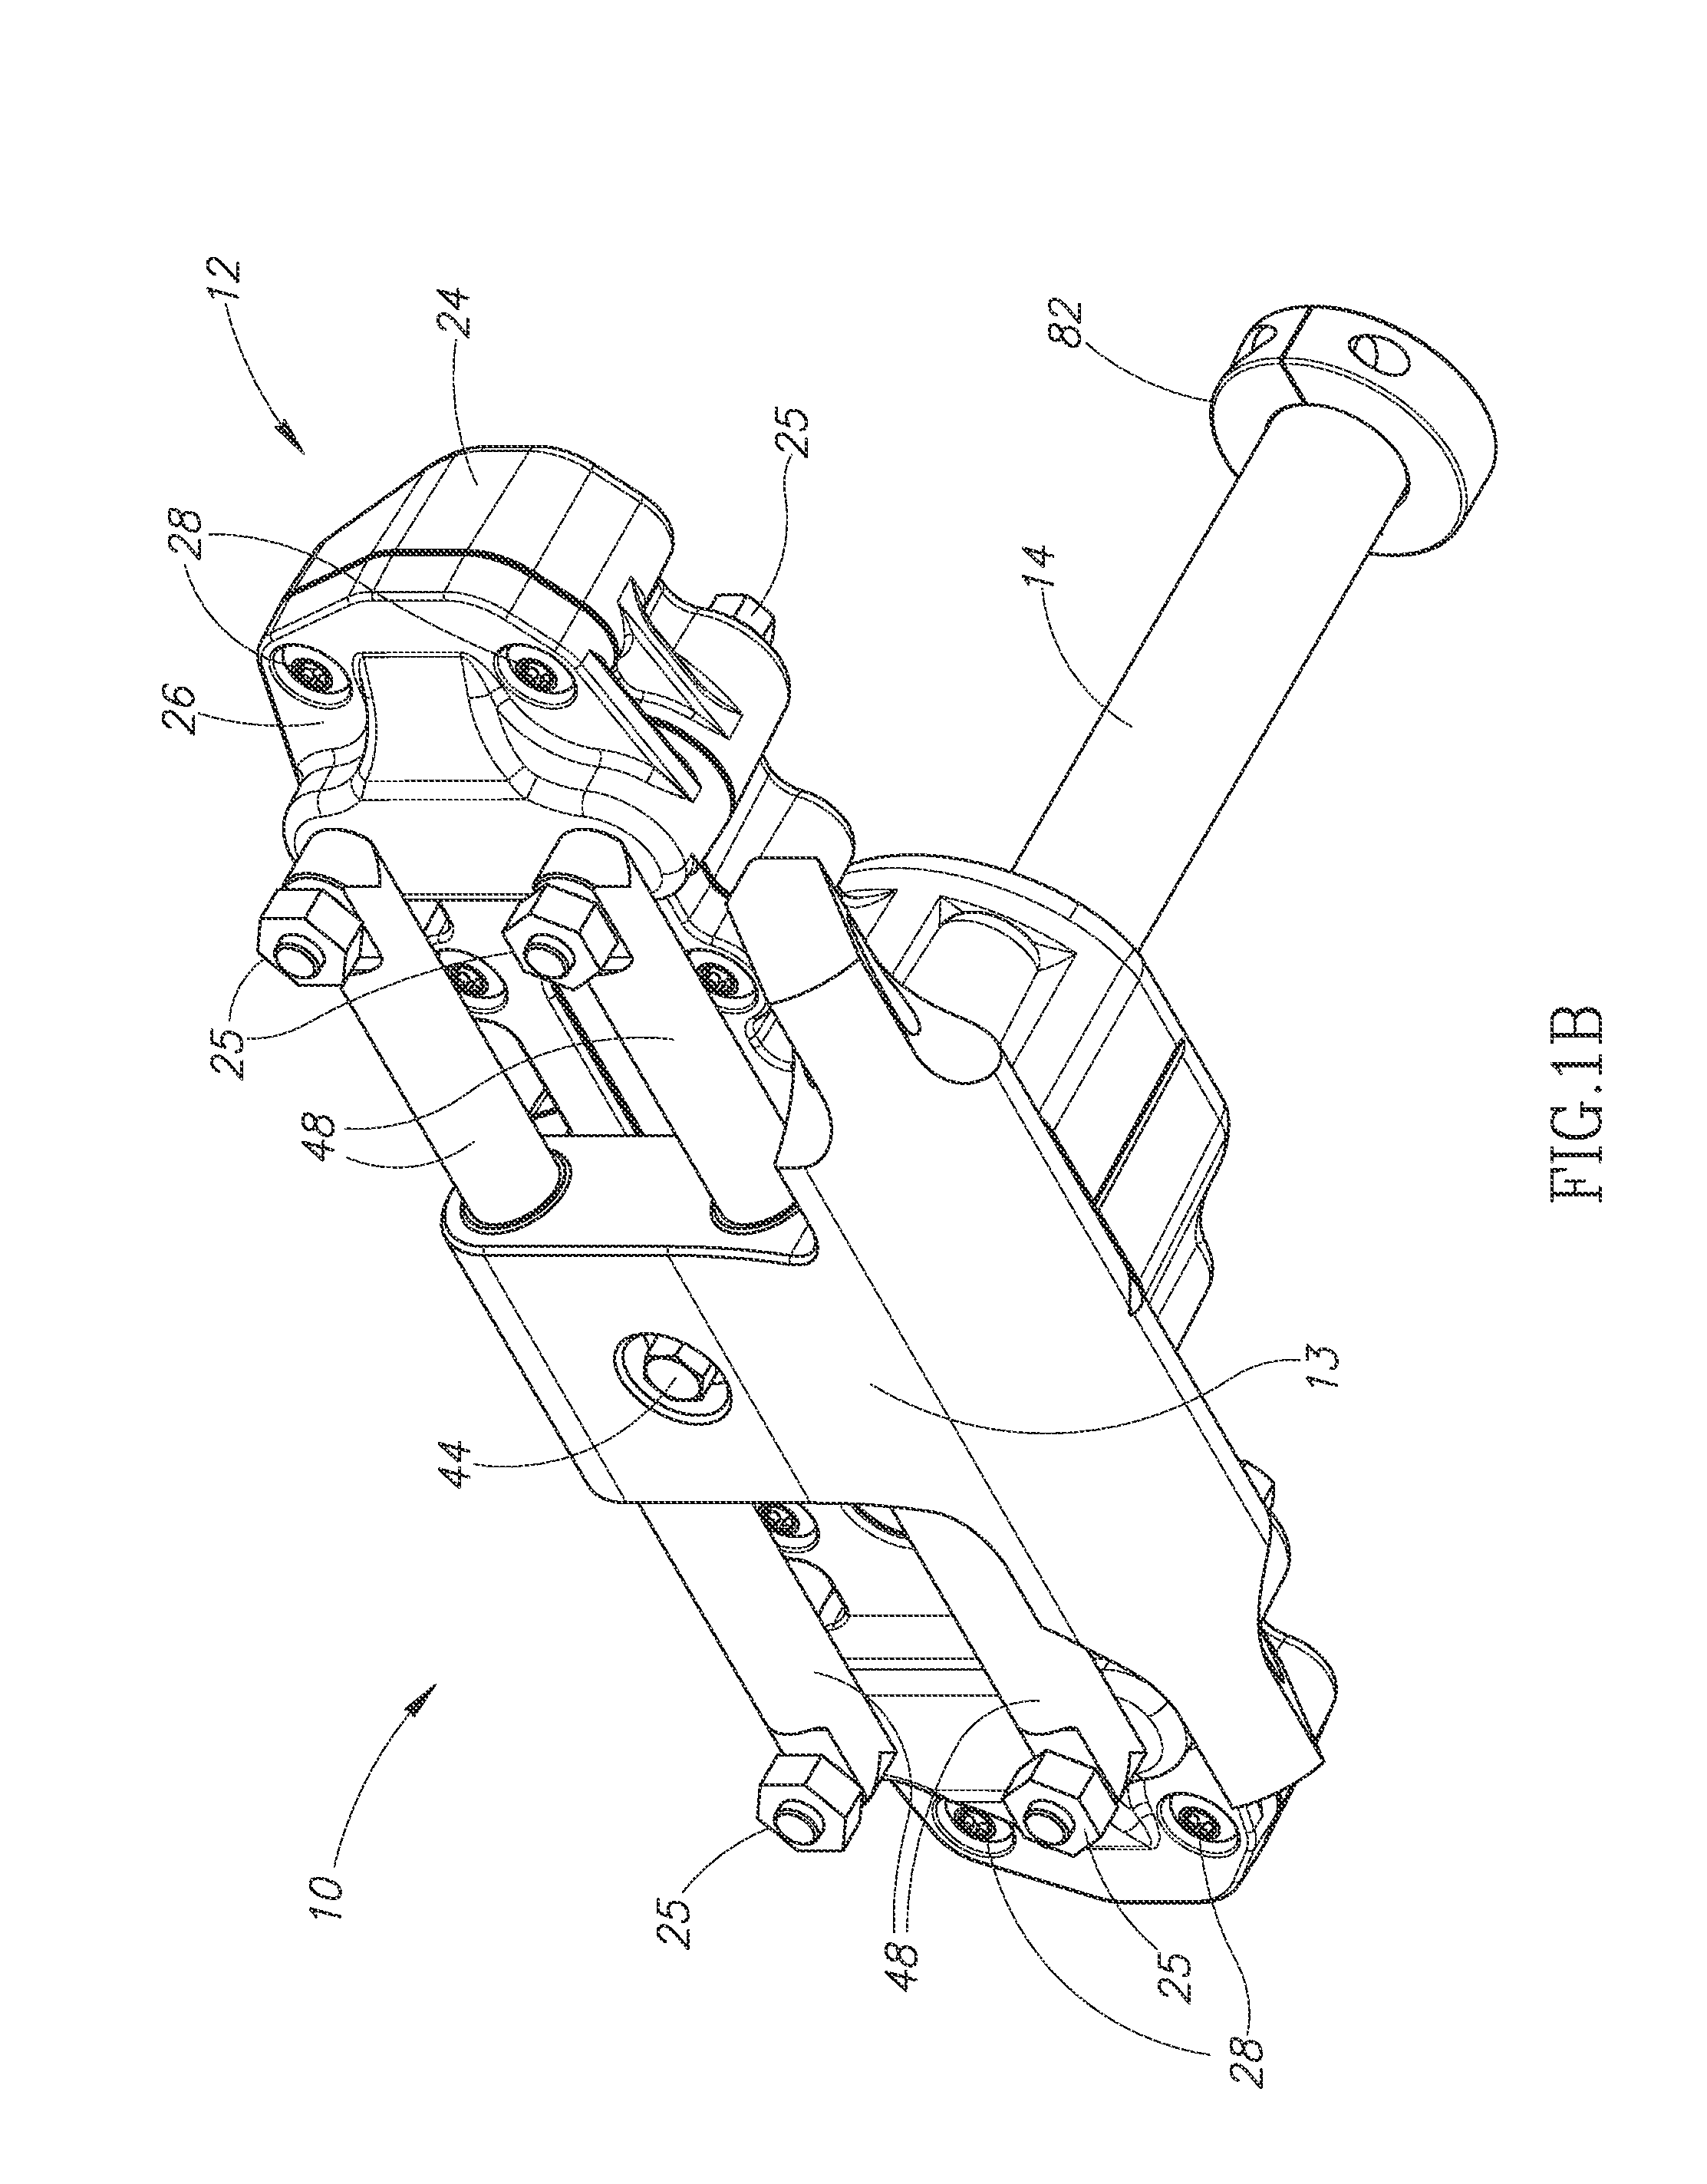 Compact steering mechanism